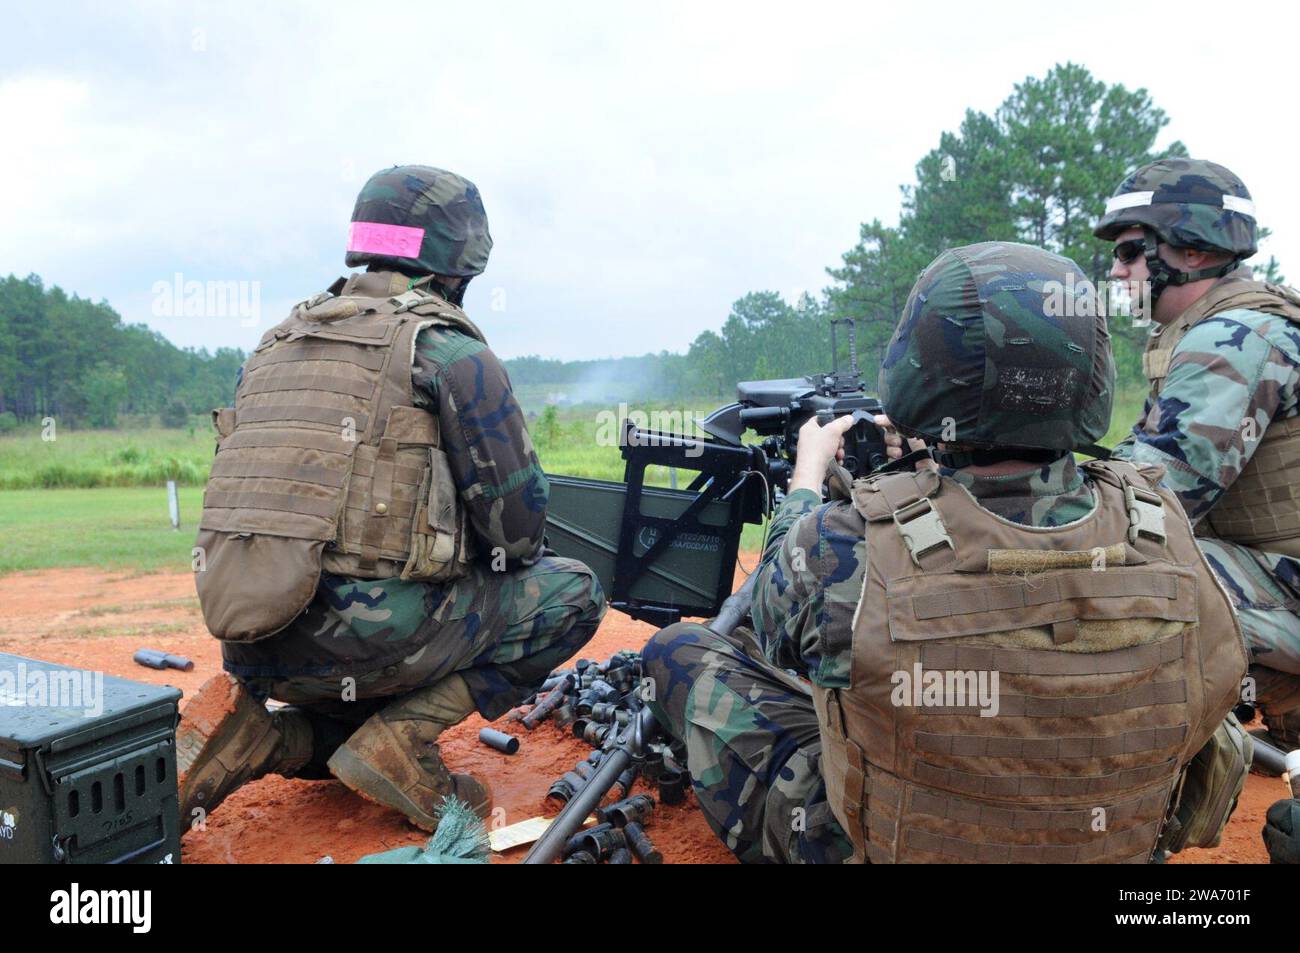 US military forces. 110902UH337-207 - NMCB 11 at MK19 firing range (Image 24 of 27). Stock Photo